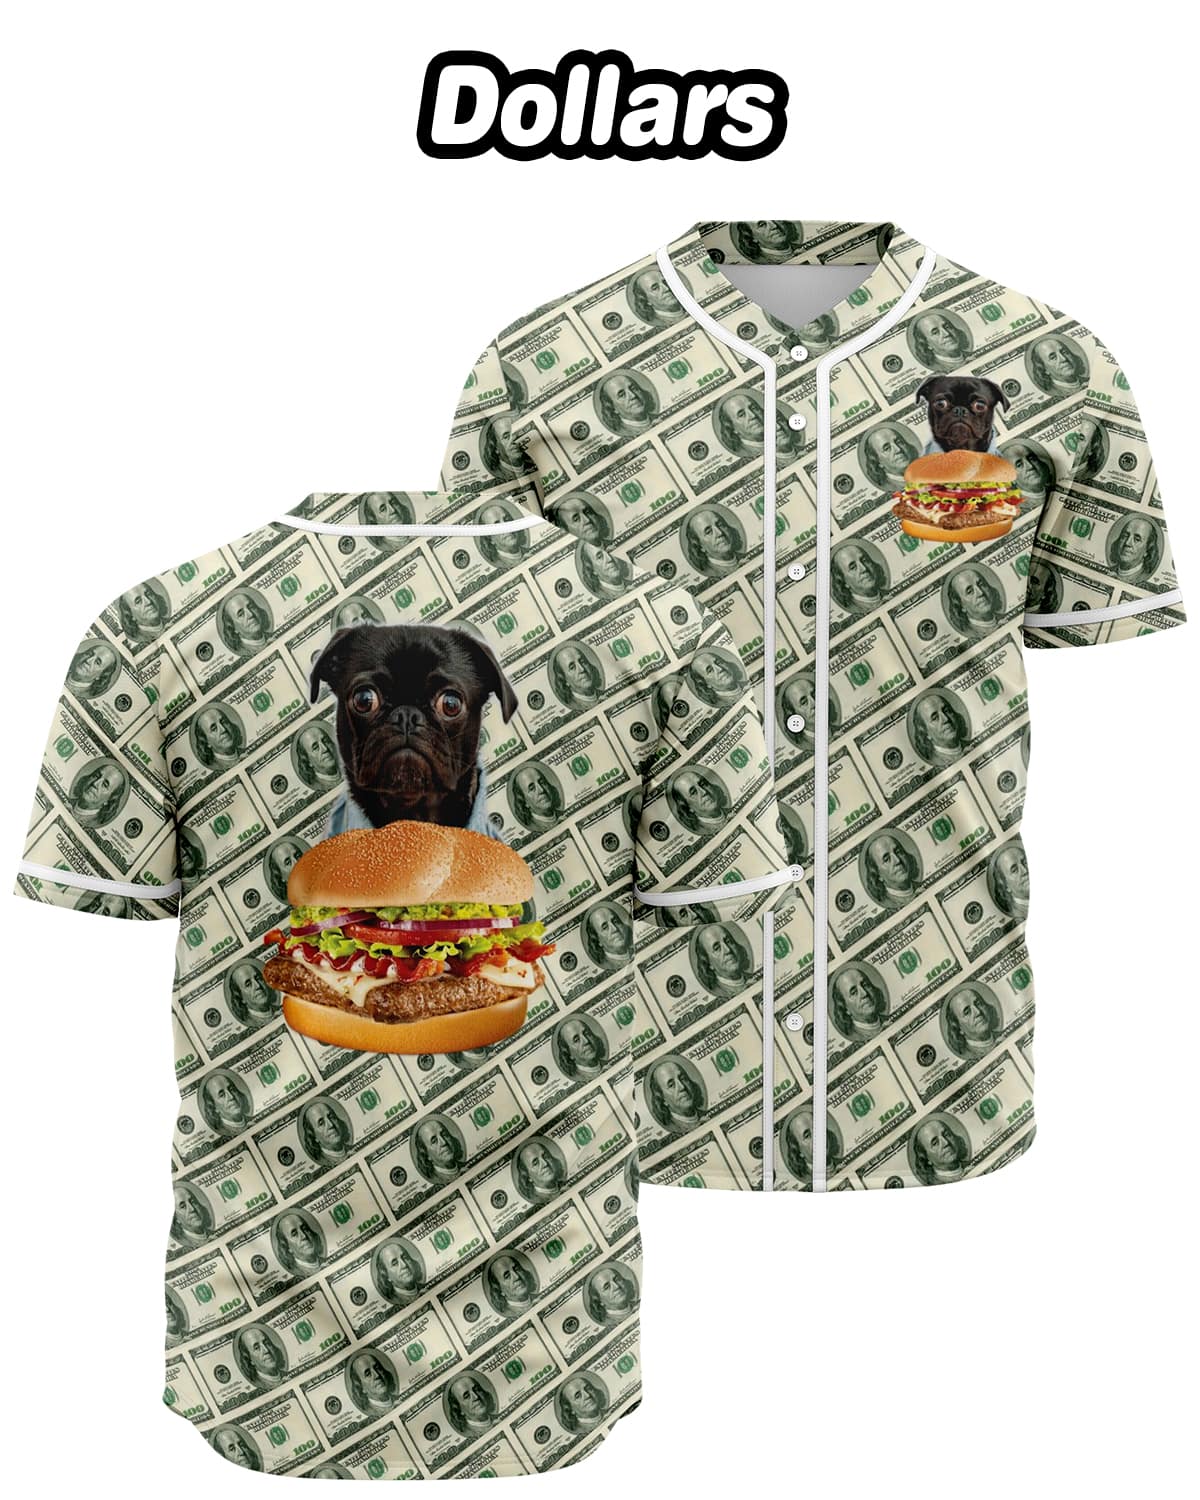 WDYWT] I printed this baseball jersey at my shop 🙃 : r/streetwear